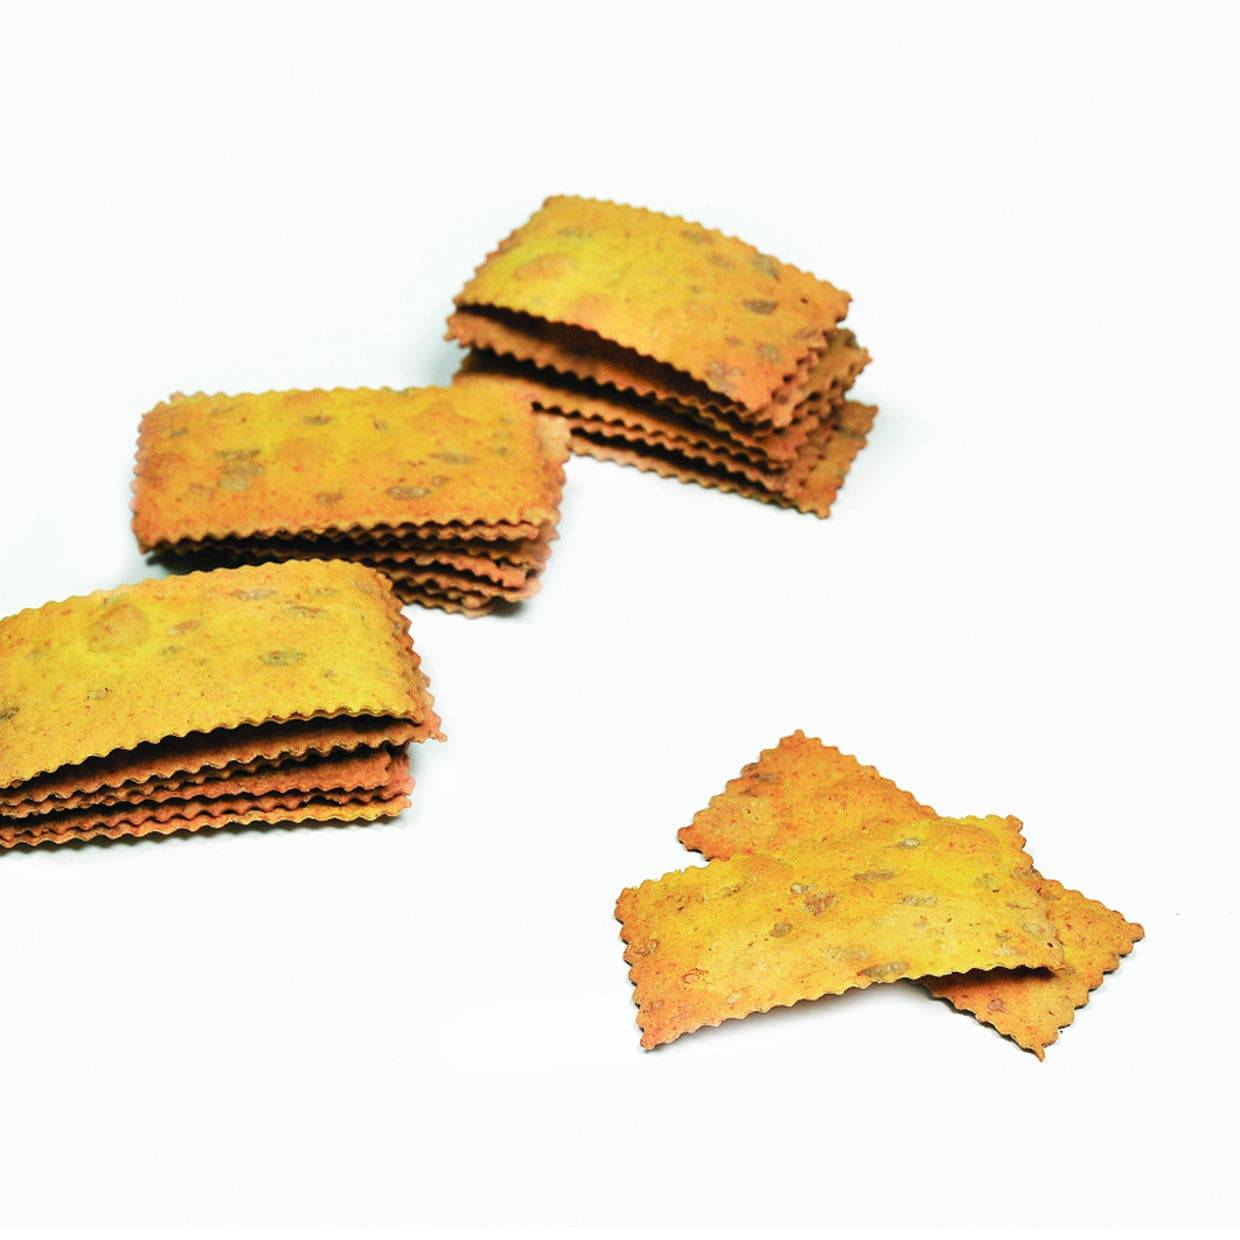 Crackers senza lievito alla Curcuma 150g  -  Bottega Bianchin - vaigustando